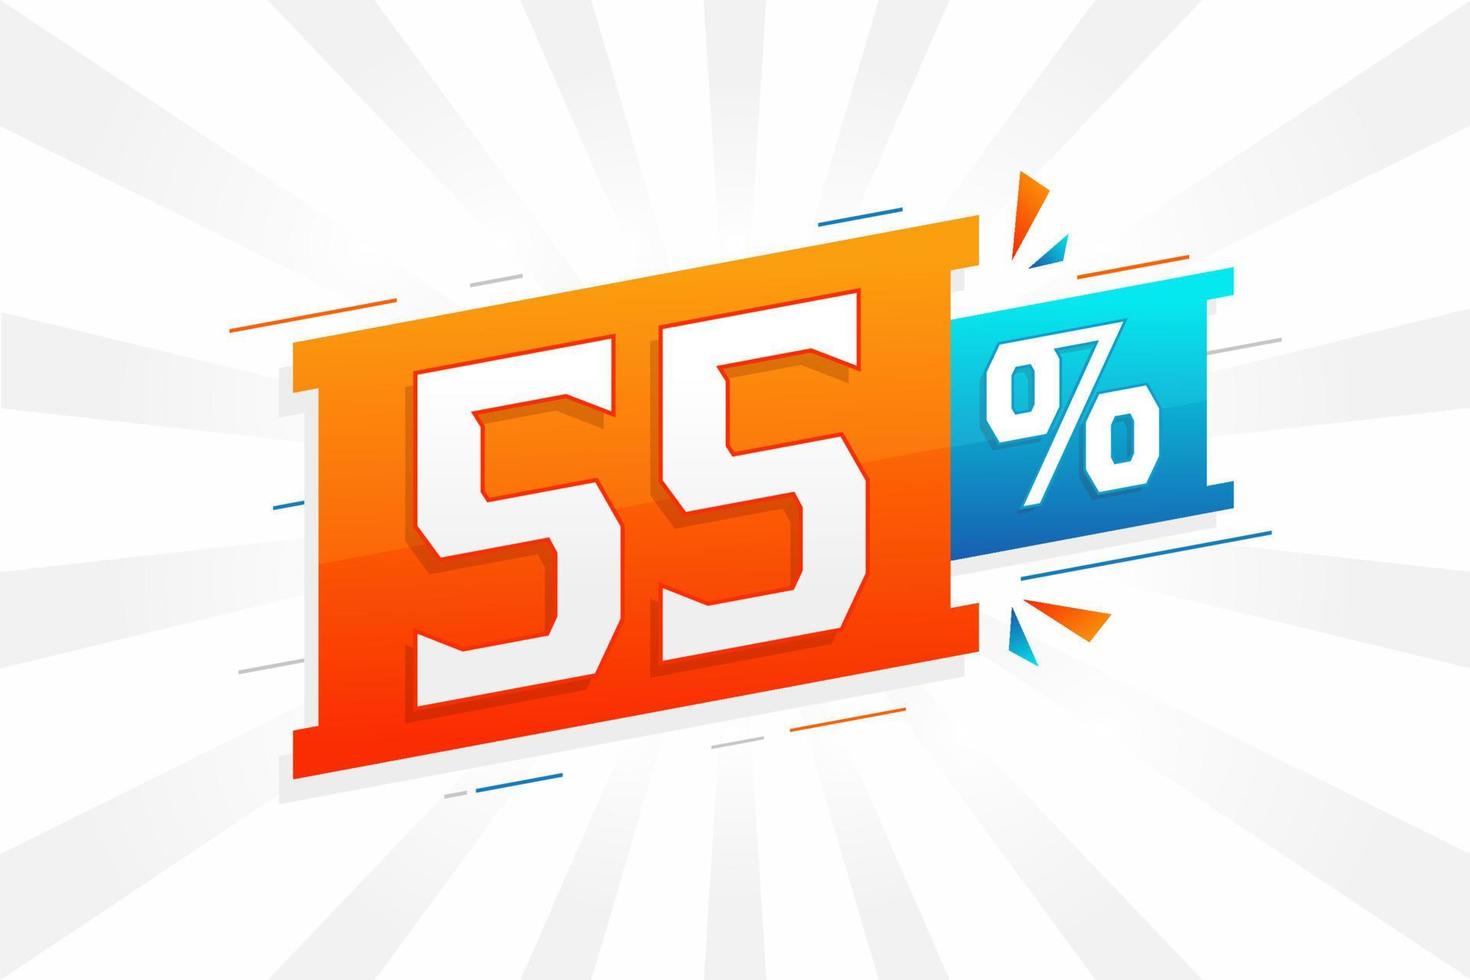 55 Rabatt-Marketing-Banner-Promotion. 55 Prozent verkaufsförderndes Design. vektor